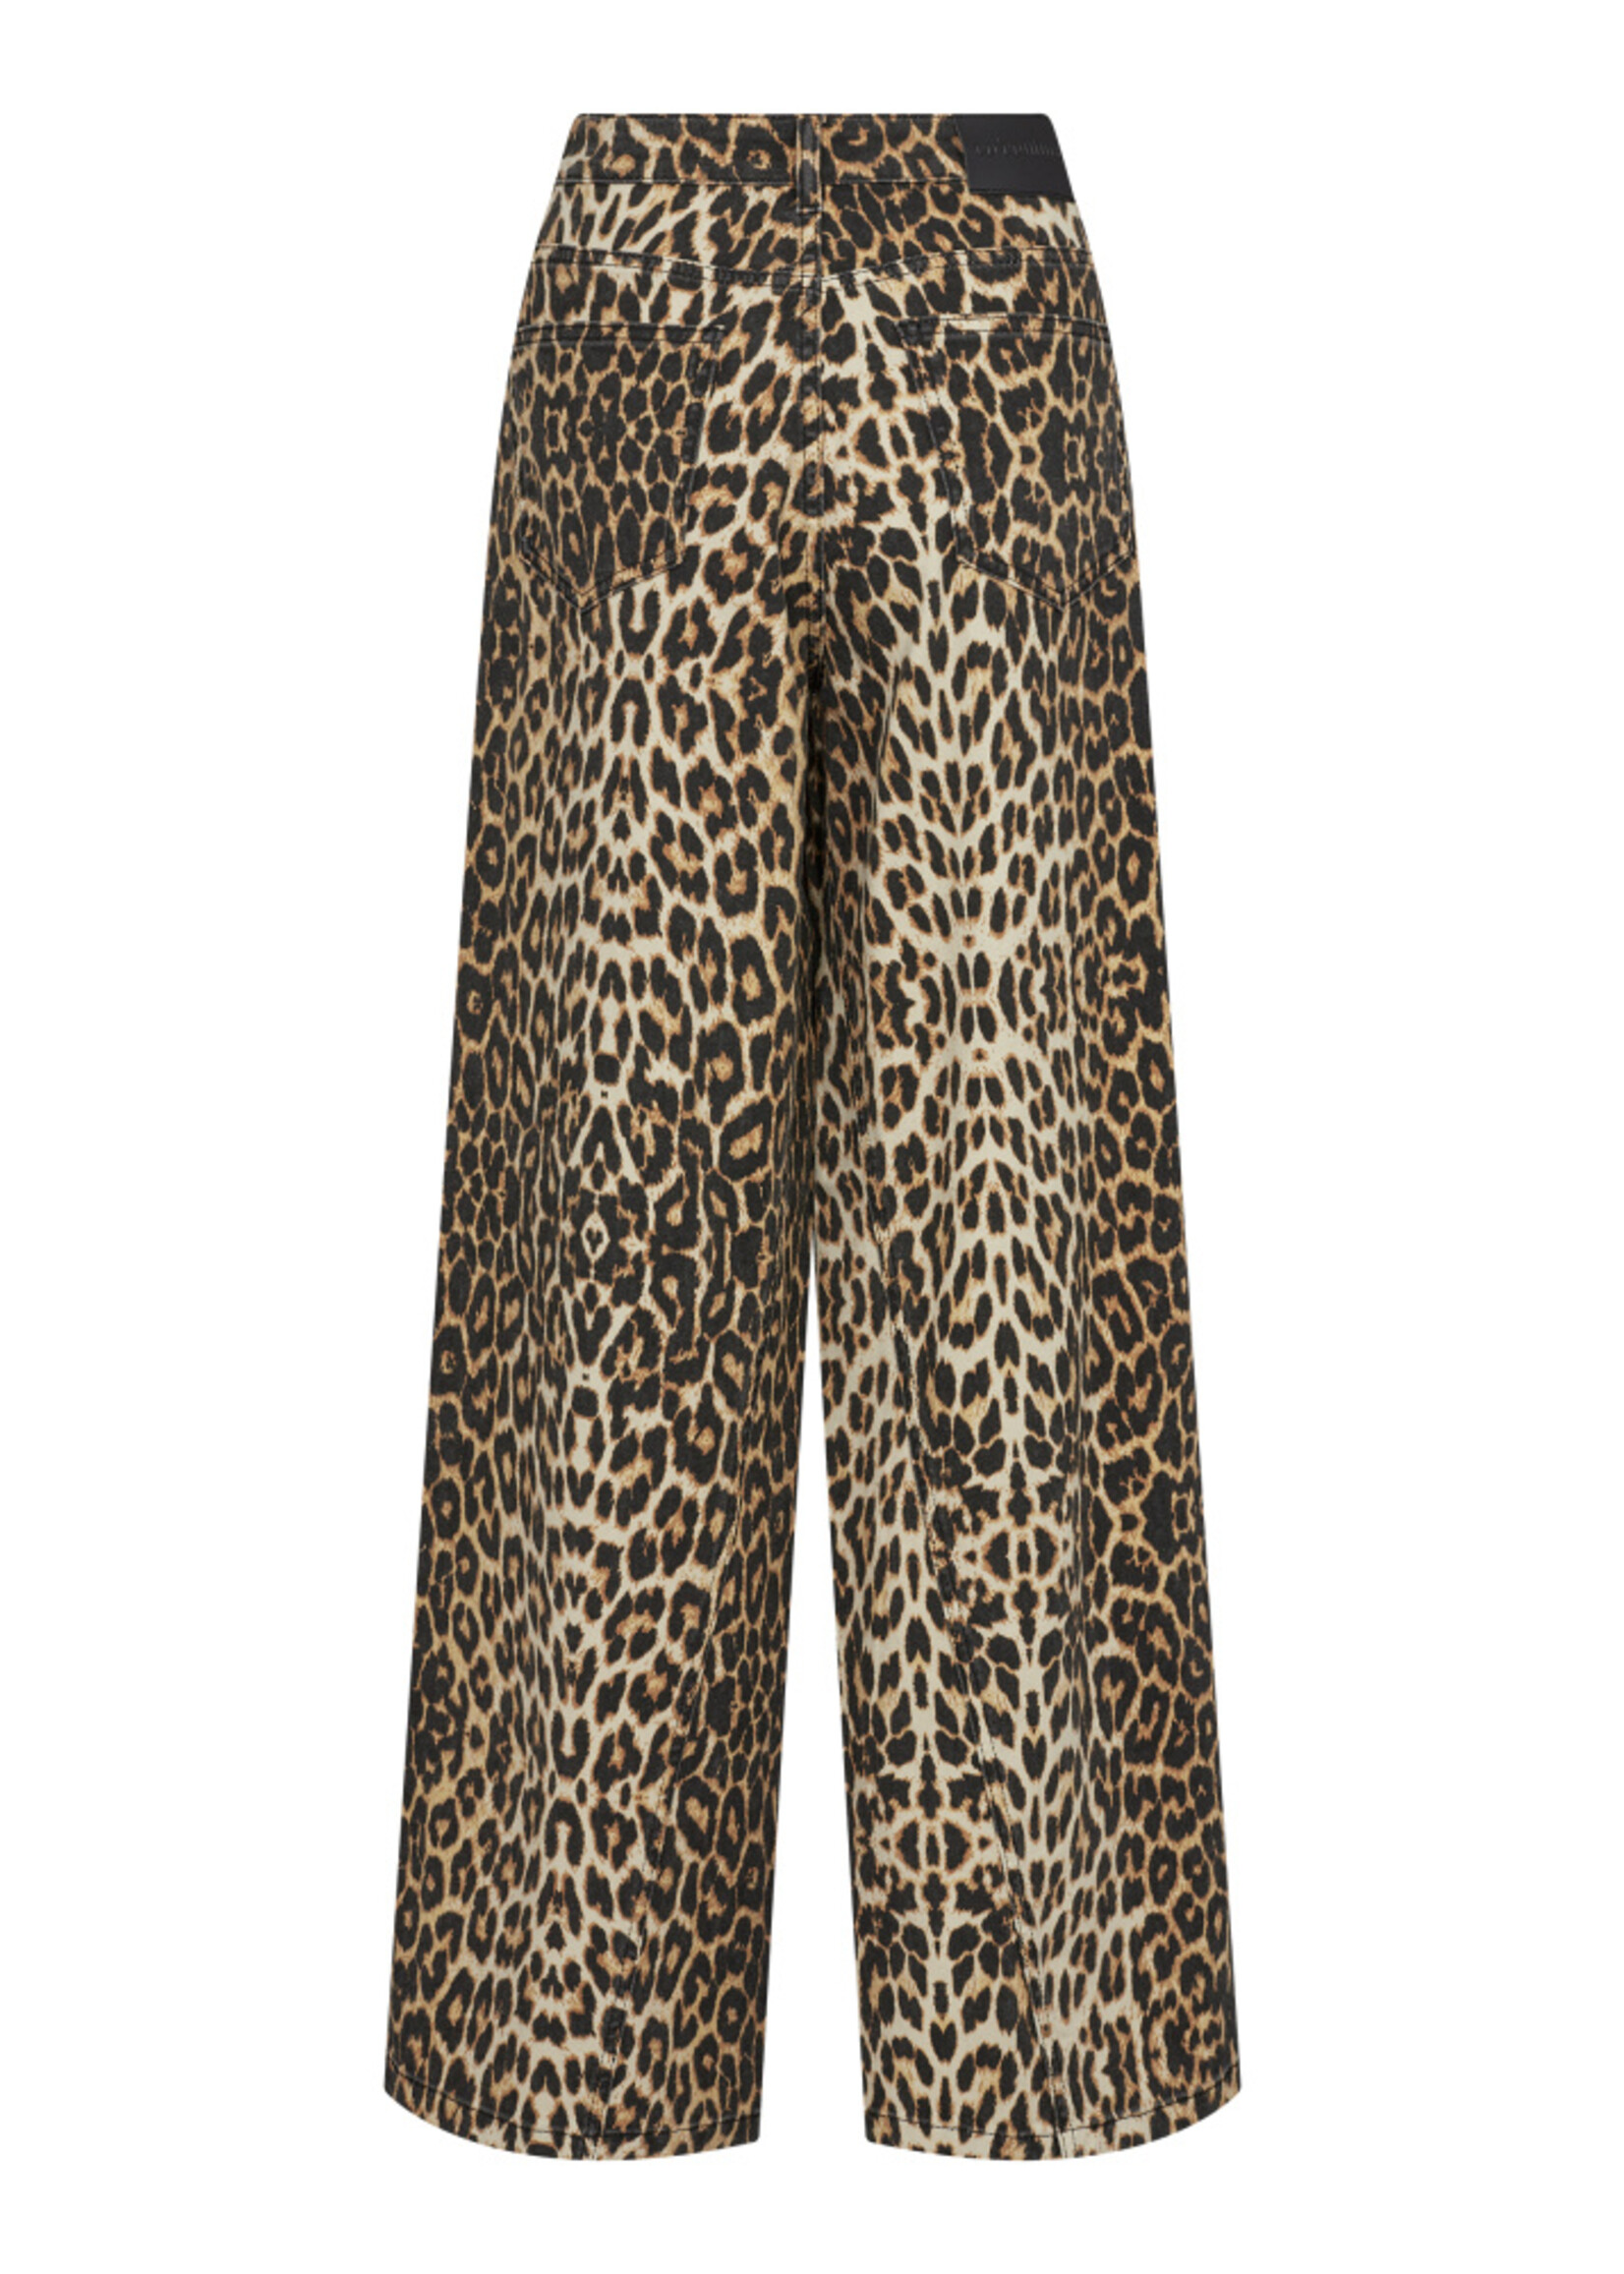 Co'Couture LeoCC Denim Panel Long Pant - Khaki